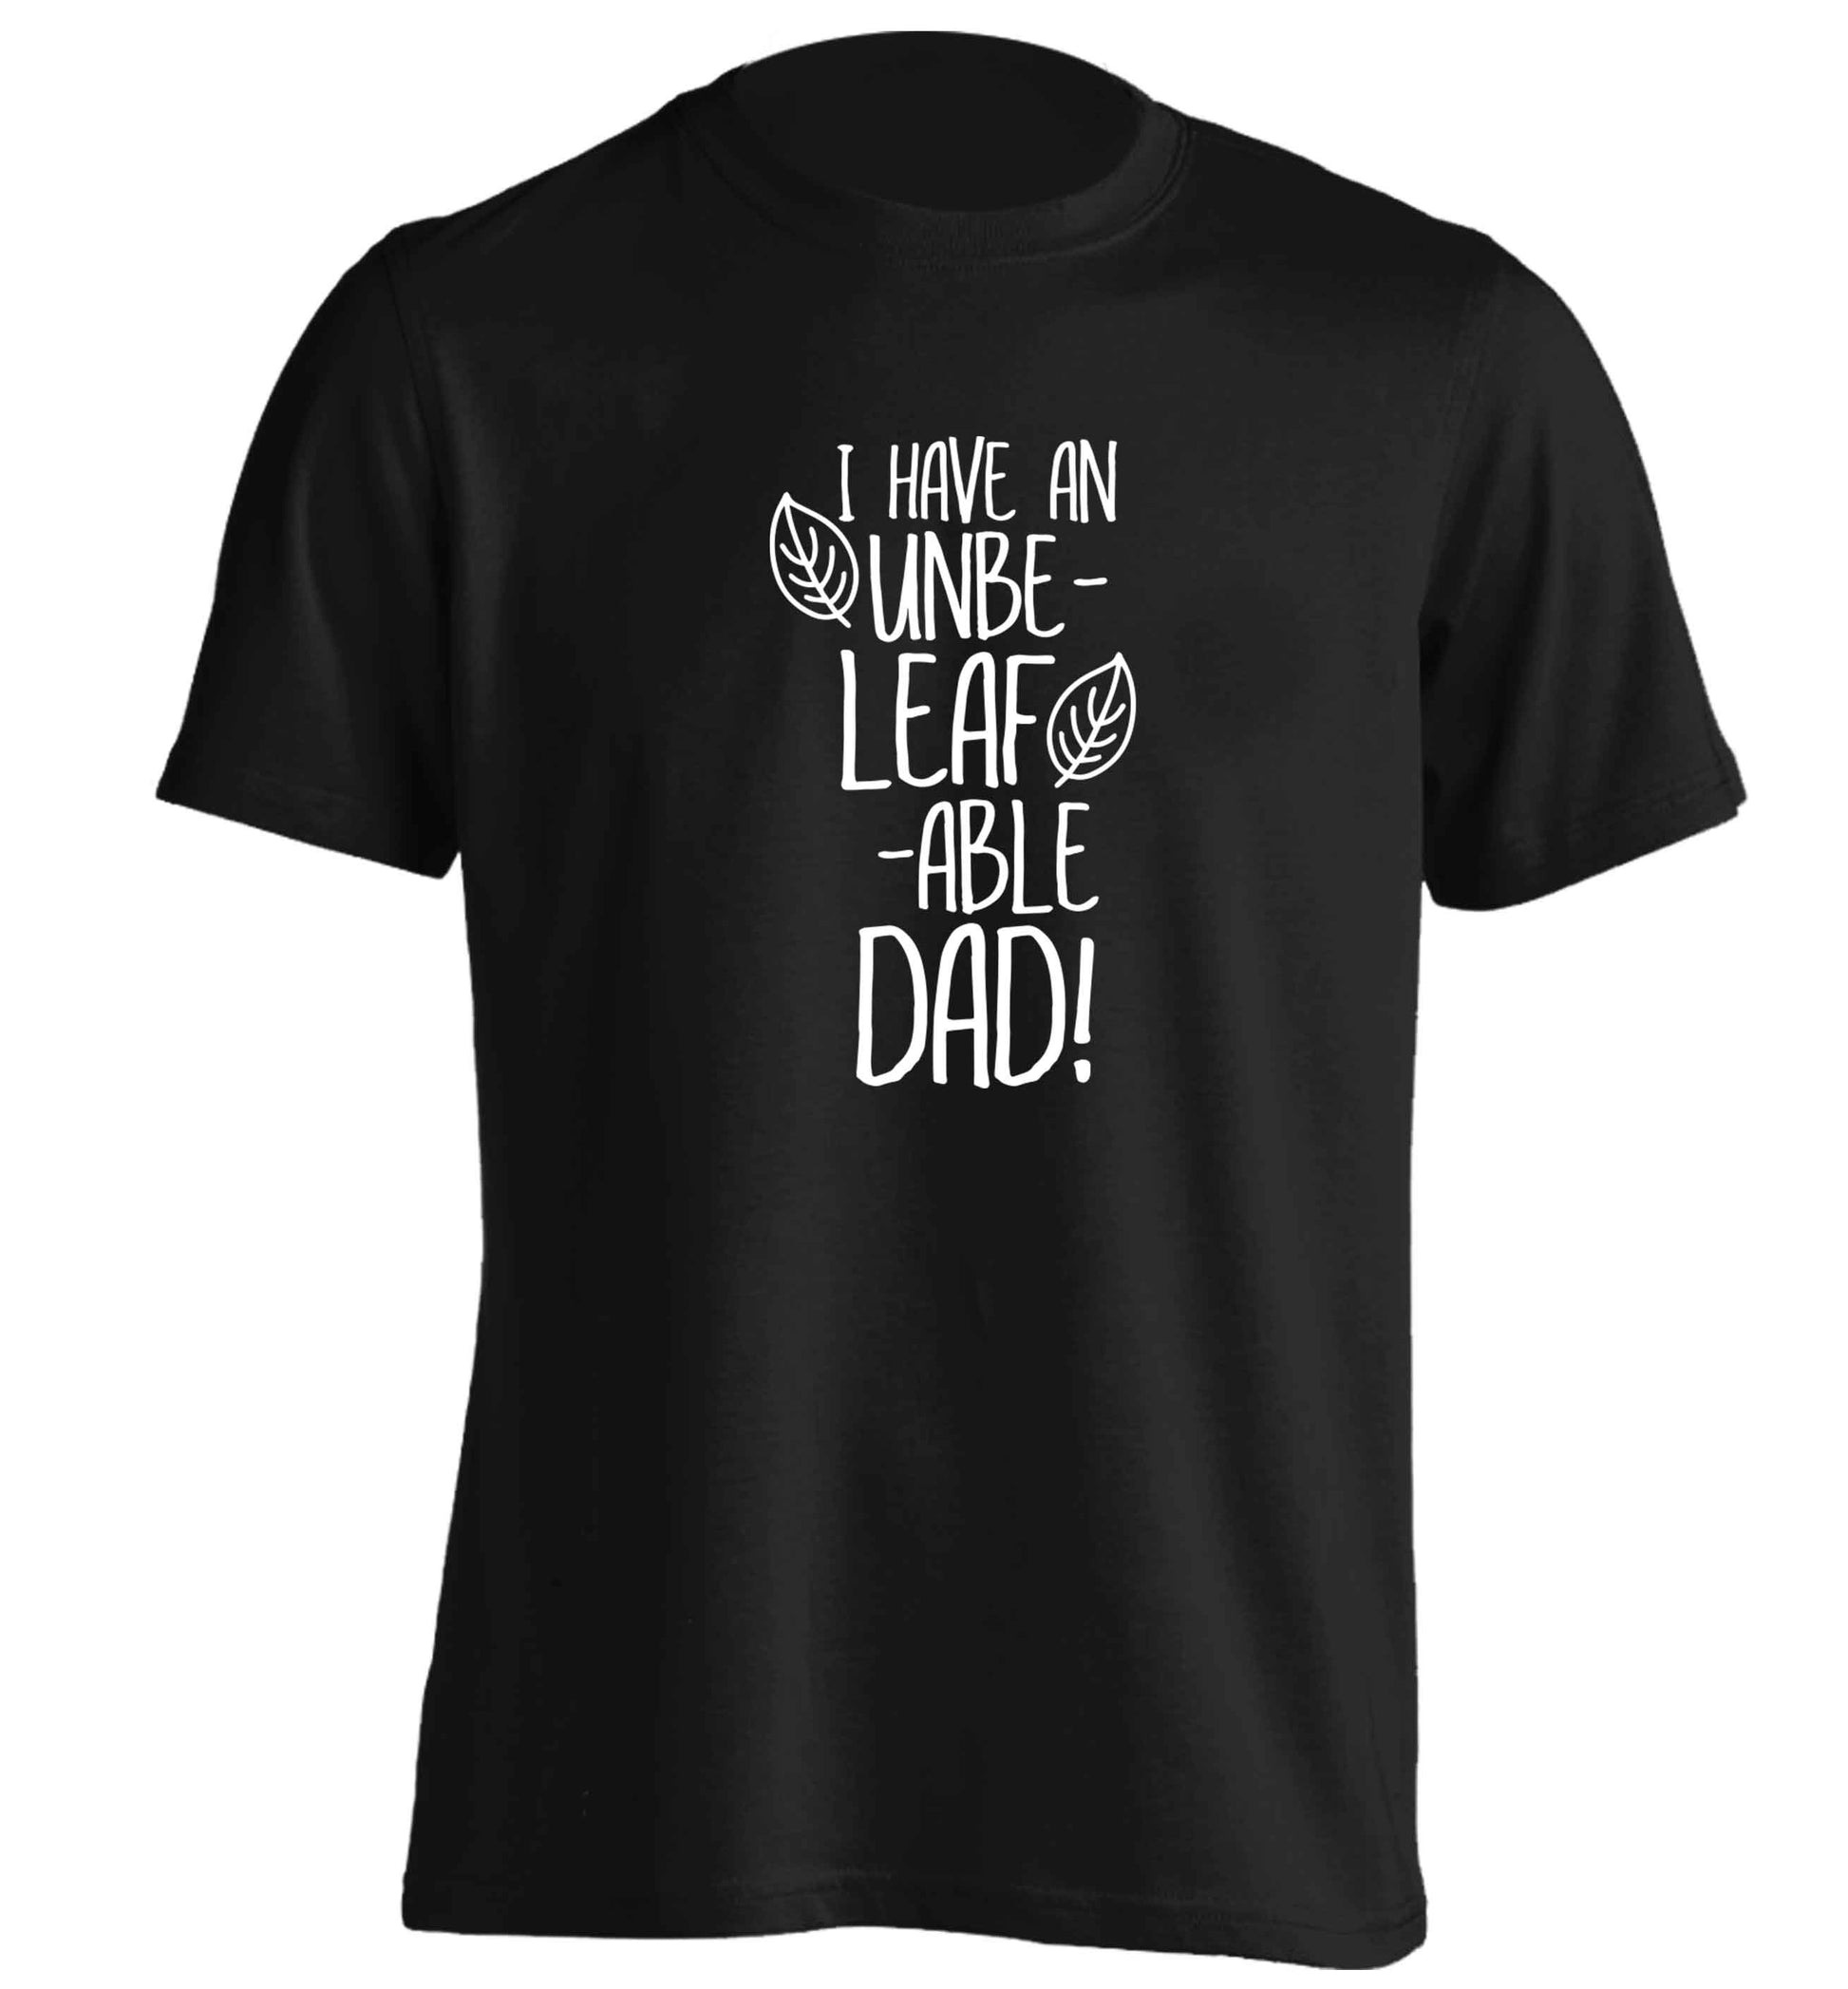 I have an unbe-leaf-able dad adults unisex black Tshirt 2XL